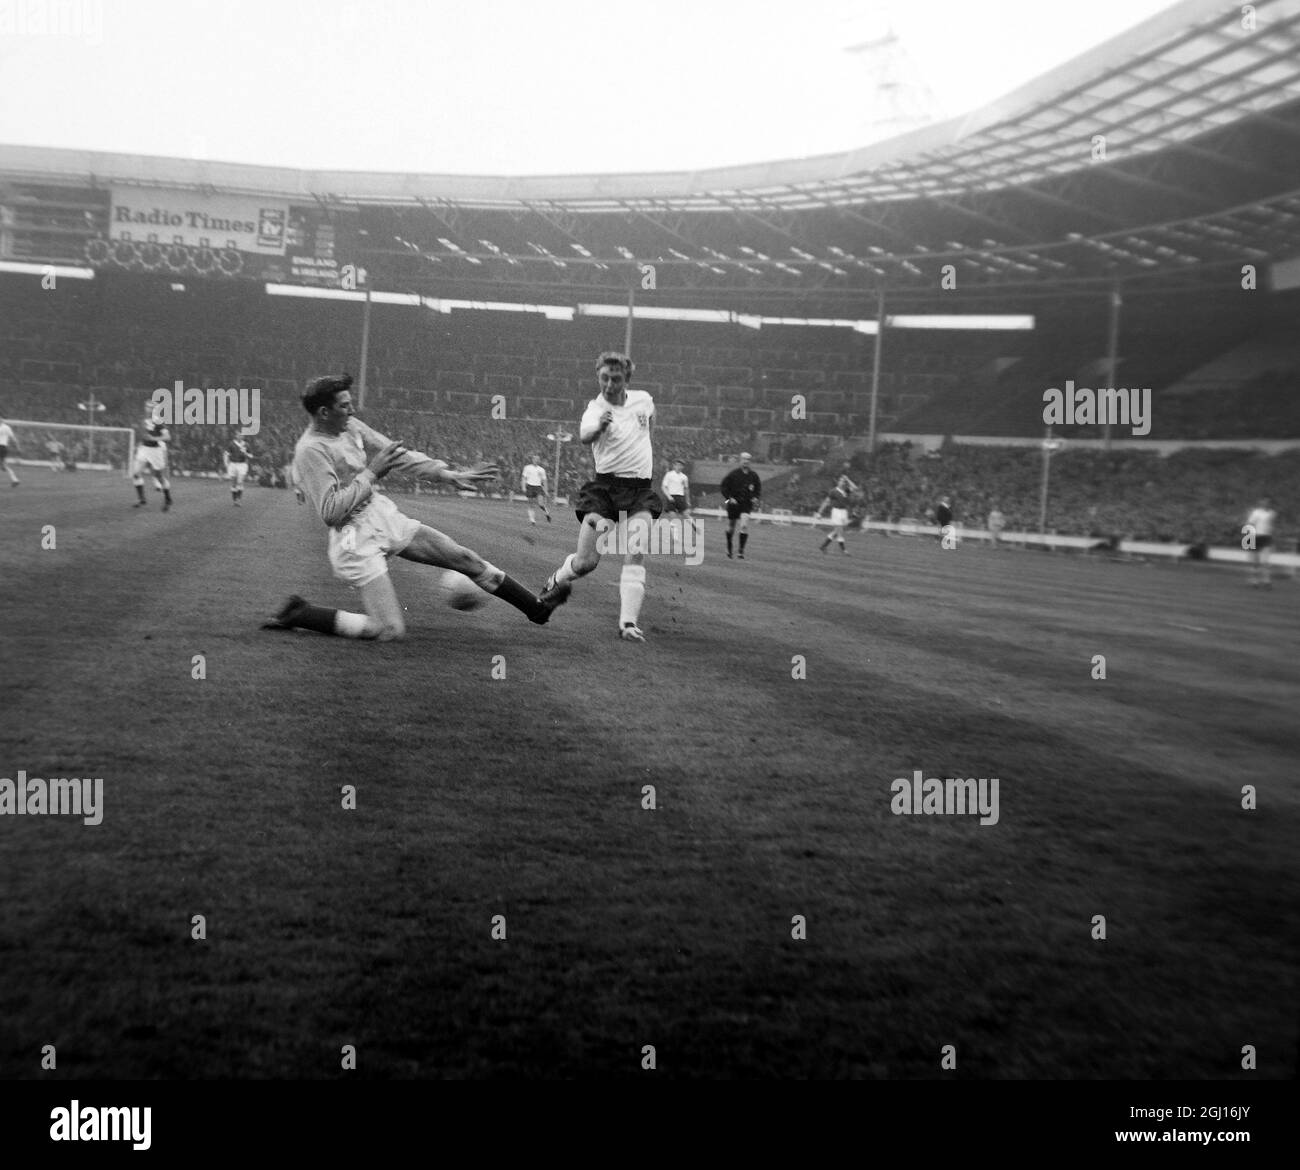 FOOTBALL IRLANDE DU NORD V ANGLETERRE JEUNESSE SISSONS ANGLETERRE POUSSE LE BALLON ; 23 AVRIL 1963 Banque D'Images